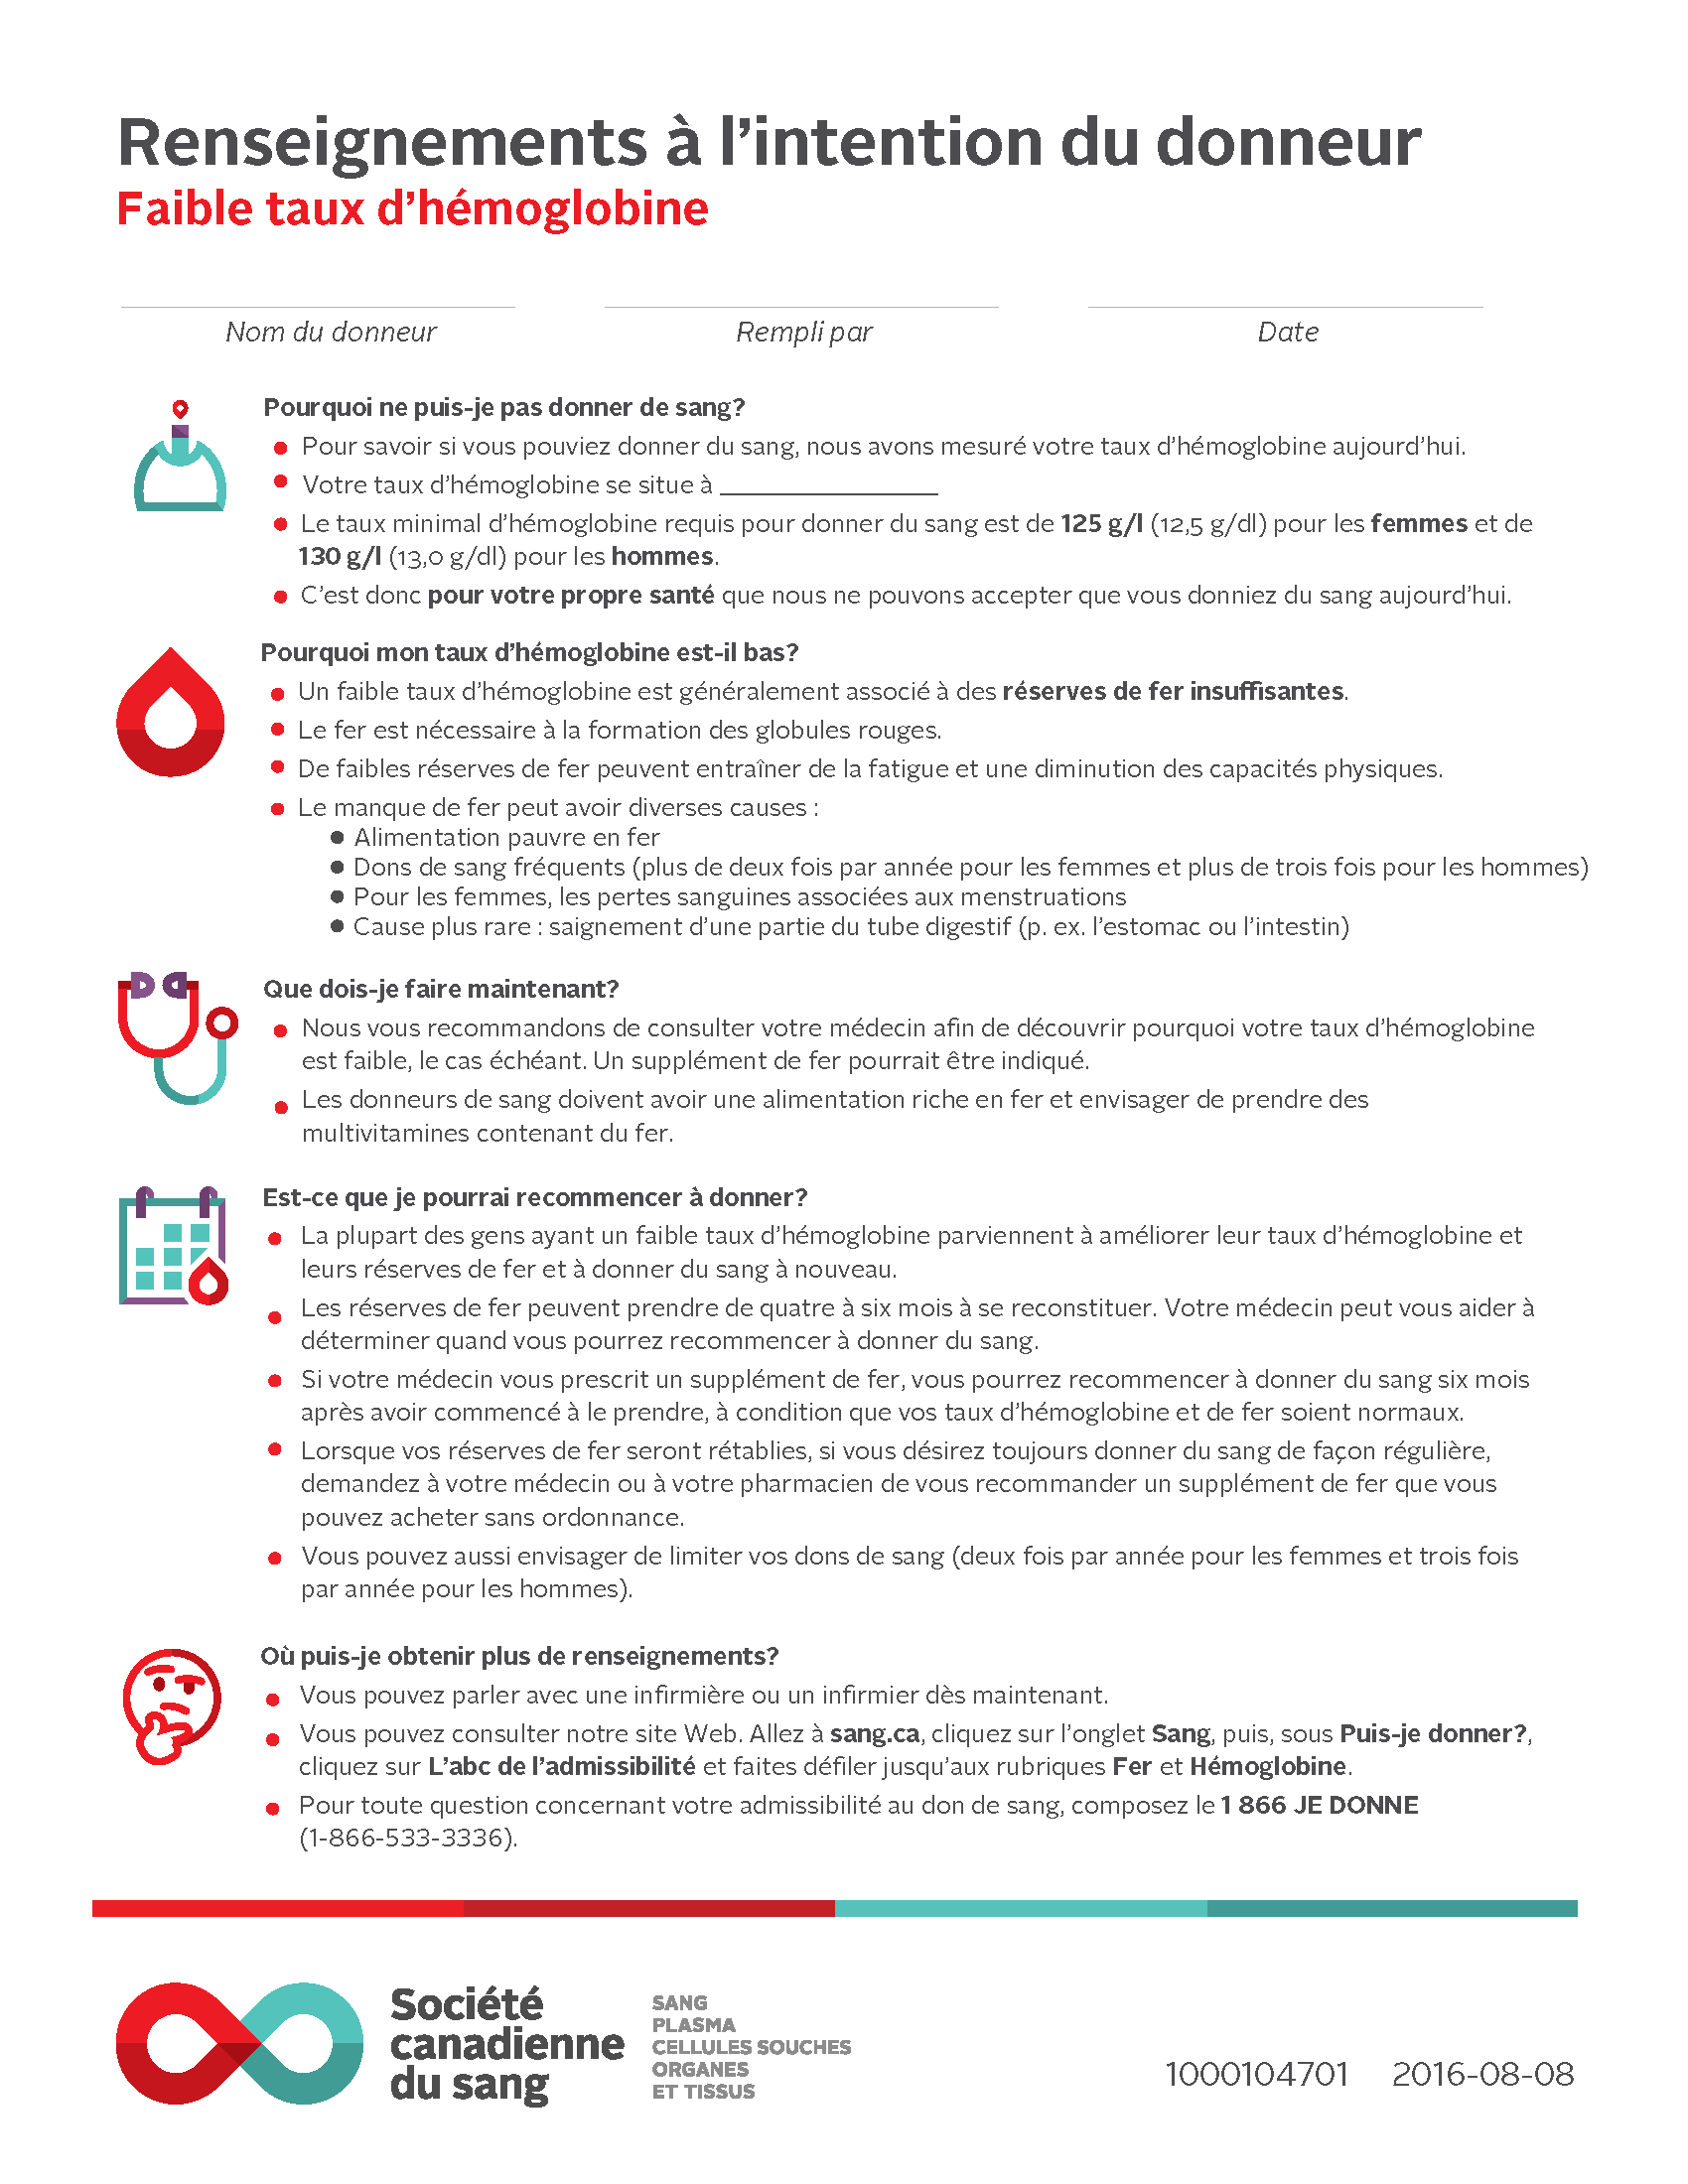 Donor information sheet - low hemoglobin measurement FR